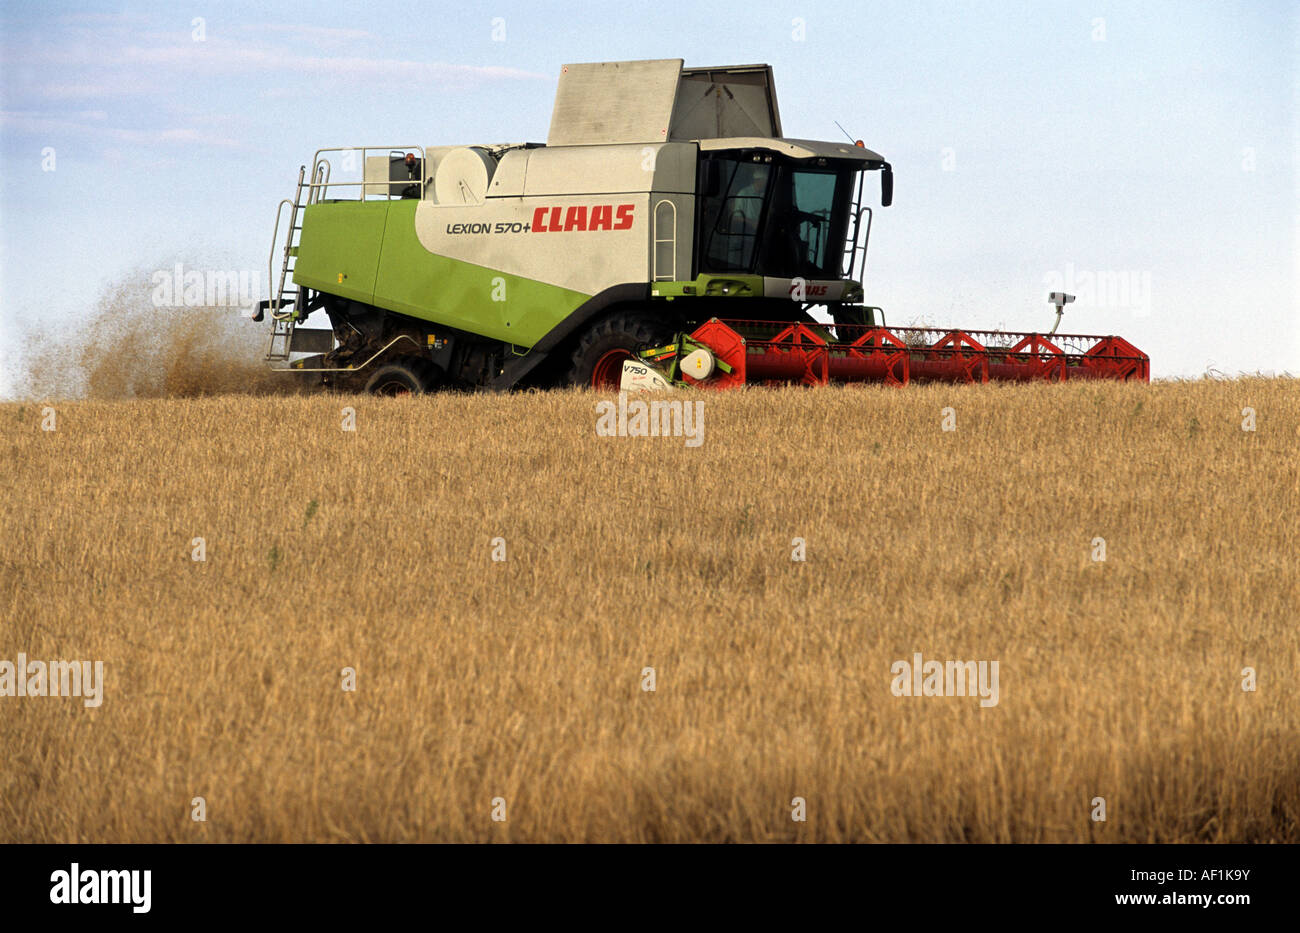 Claas combine harvester cutting wheat on farmland near Snape, Suffolk, UK. Stock Photo